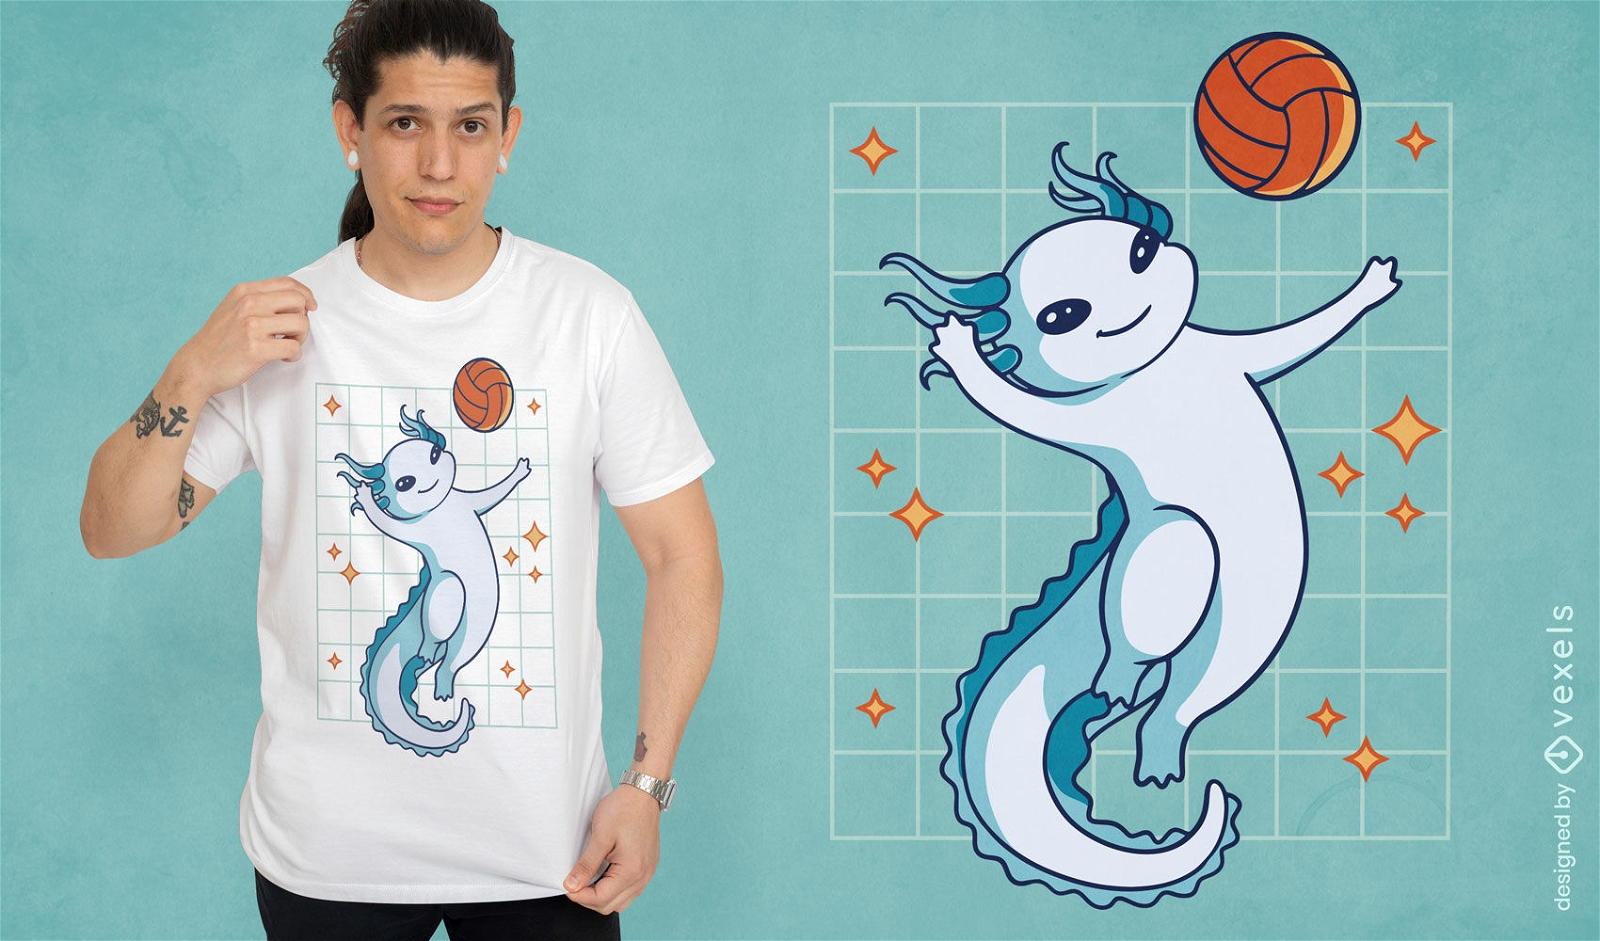 Axolotl playing basketball t-shirt design